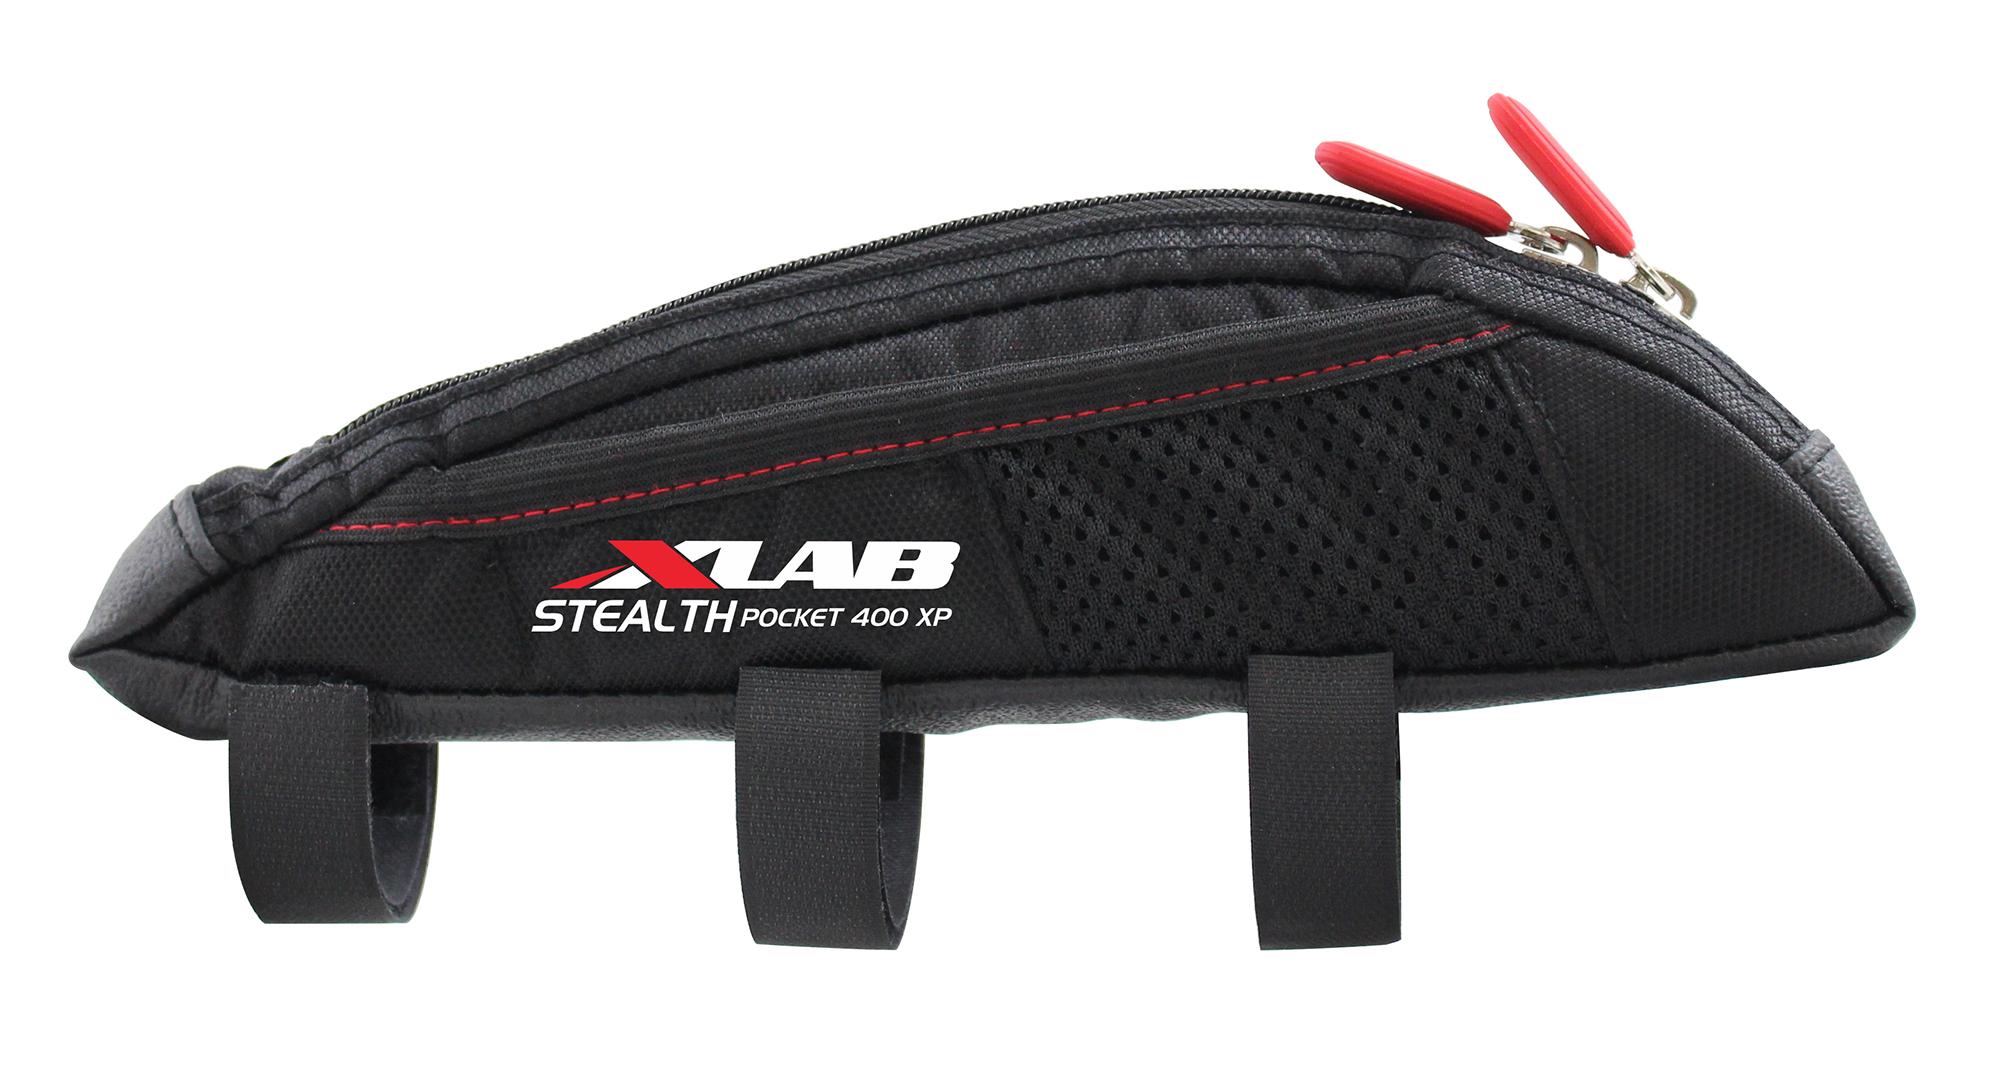 Xlab Stealth Pocket 400 Xp Top Tube Bag  Black